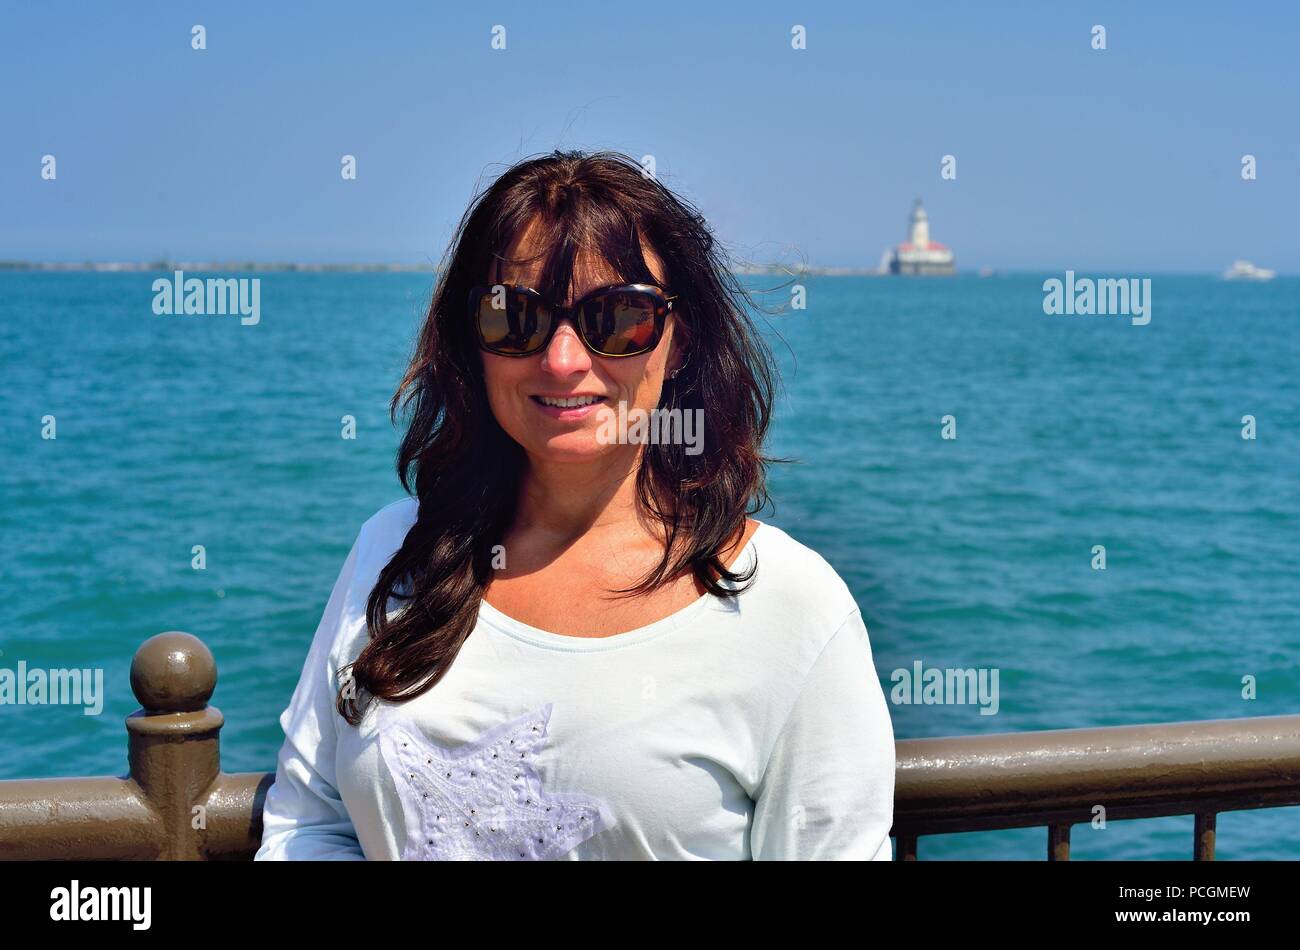 Chicago, Illinois, USA. Woman enjoying a summer visit to Navy Pier. Stock Photo